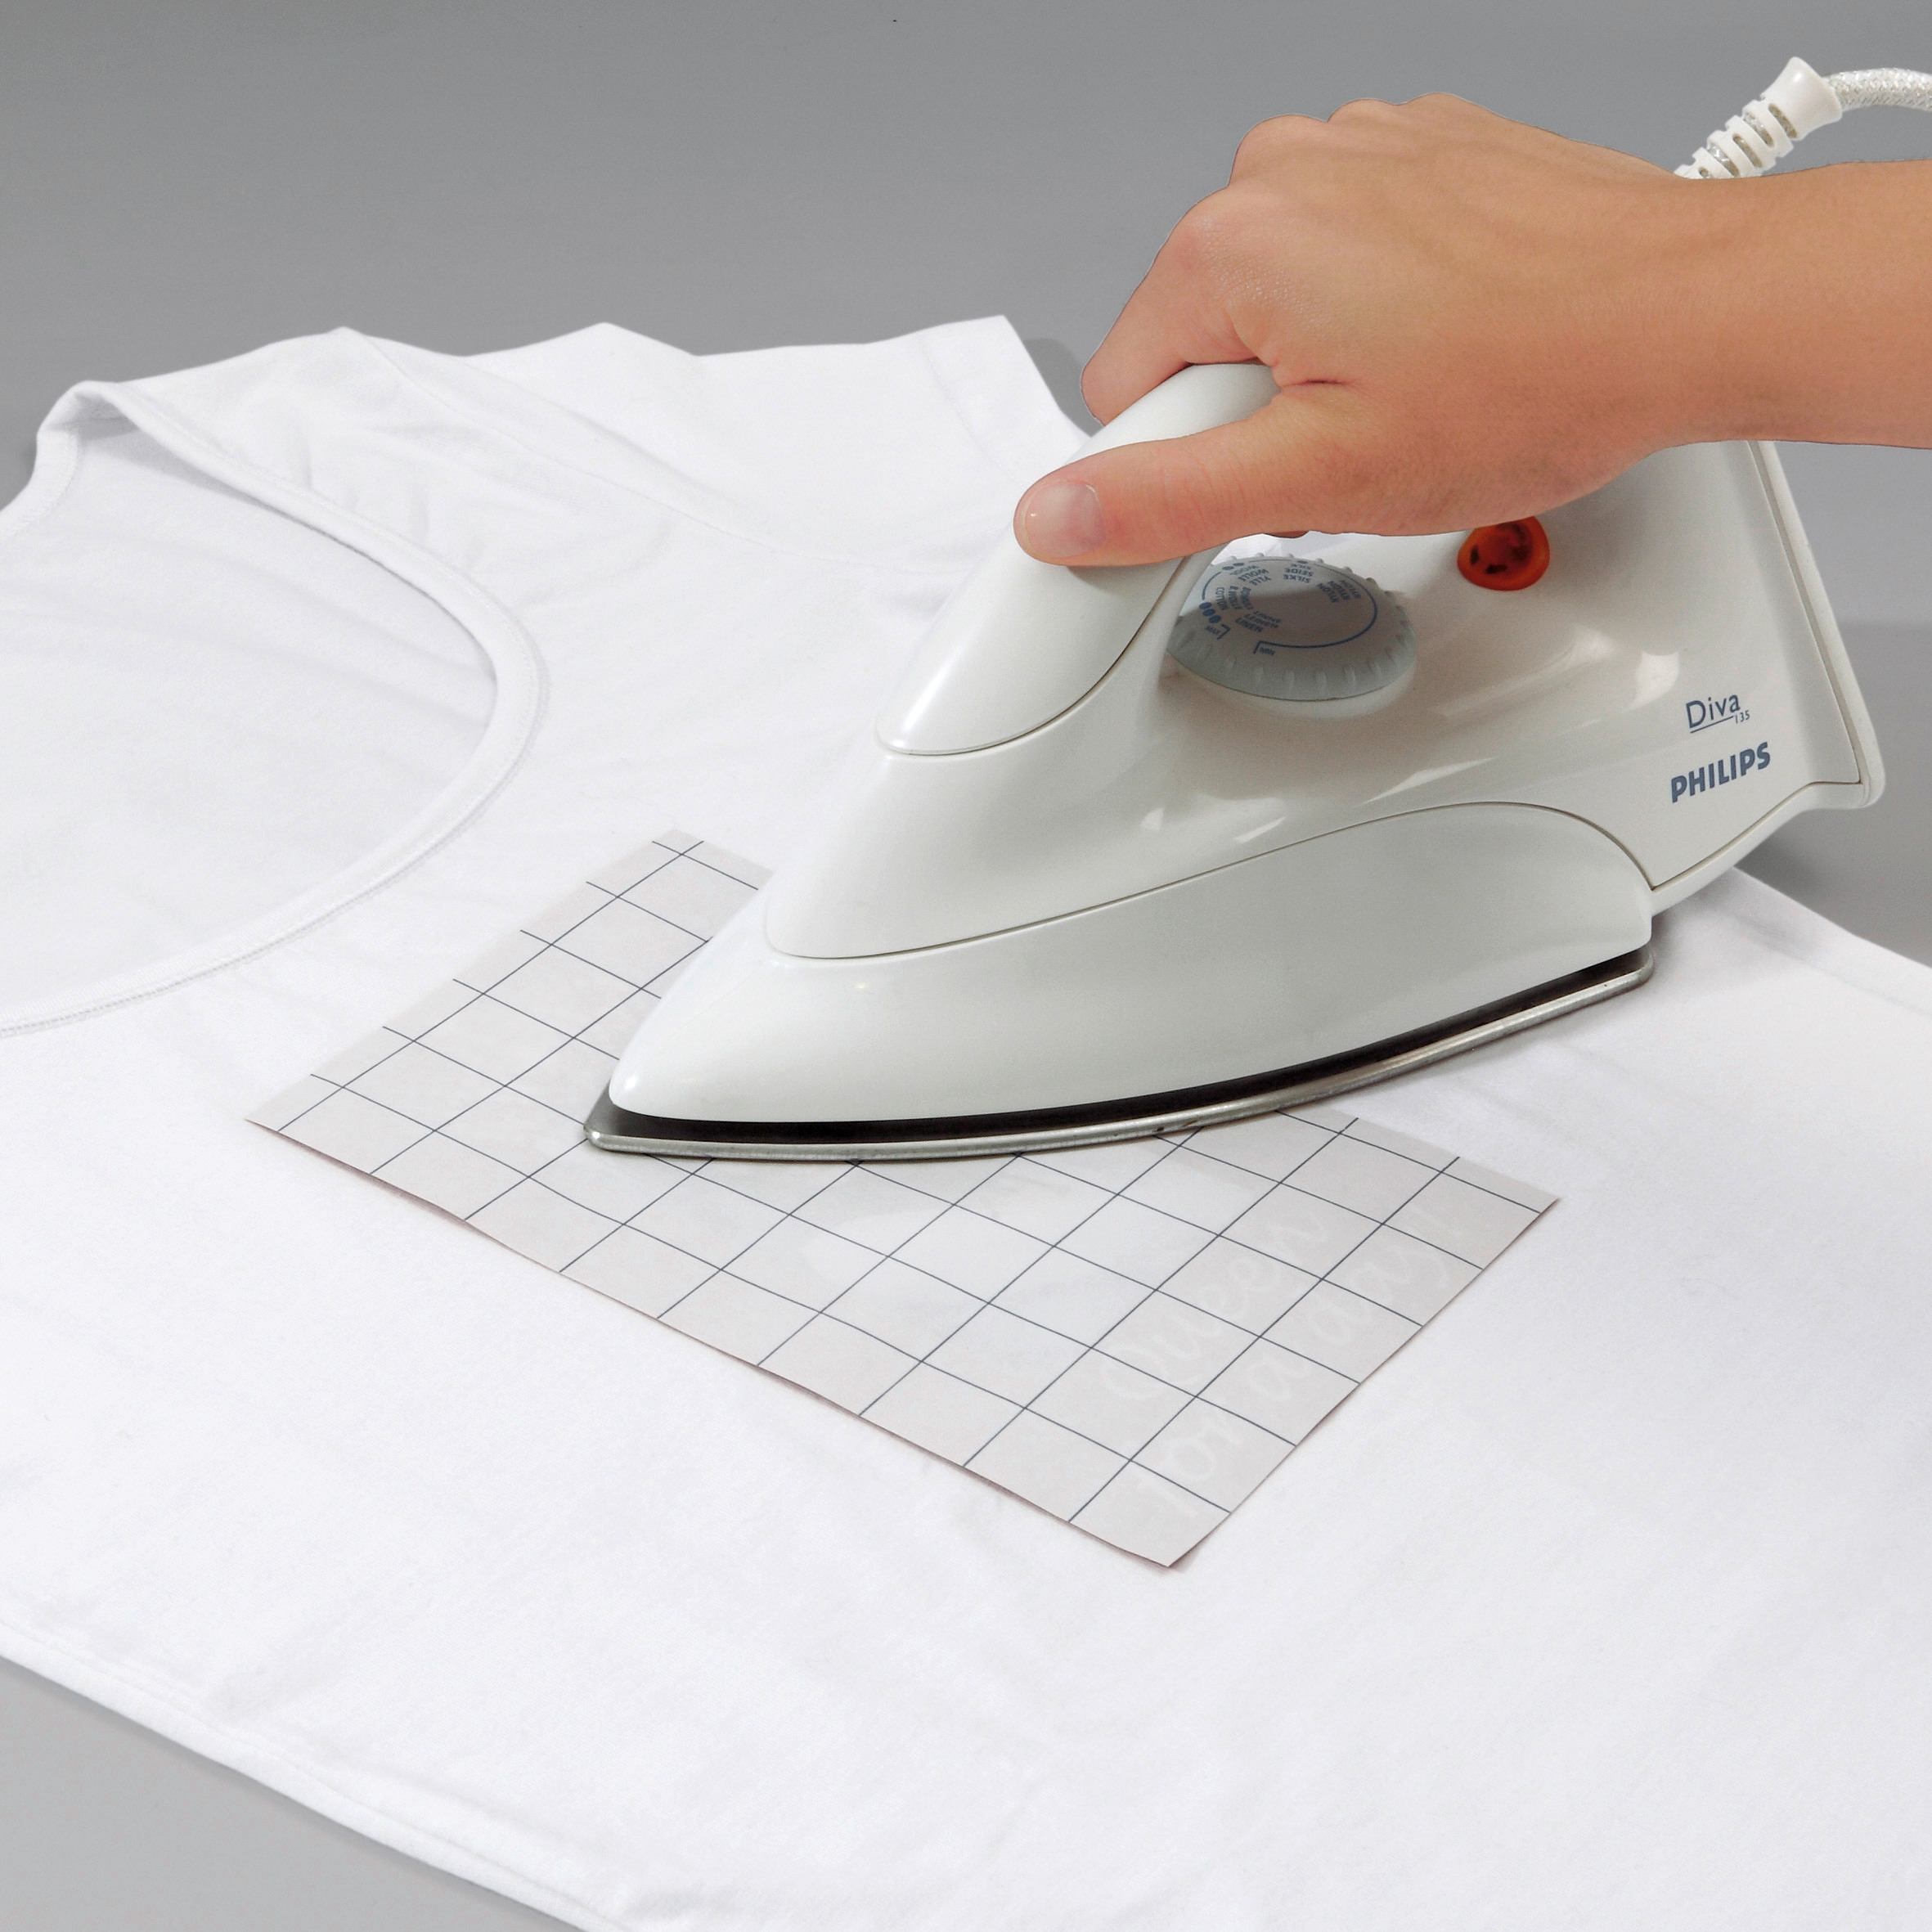 SIGEL Inkjet-Transfer T-Shirt A4 IP650 helle Textilien 3 feuilles